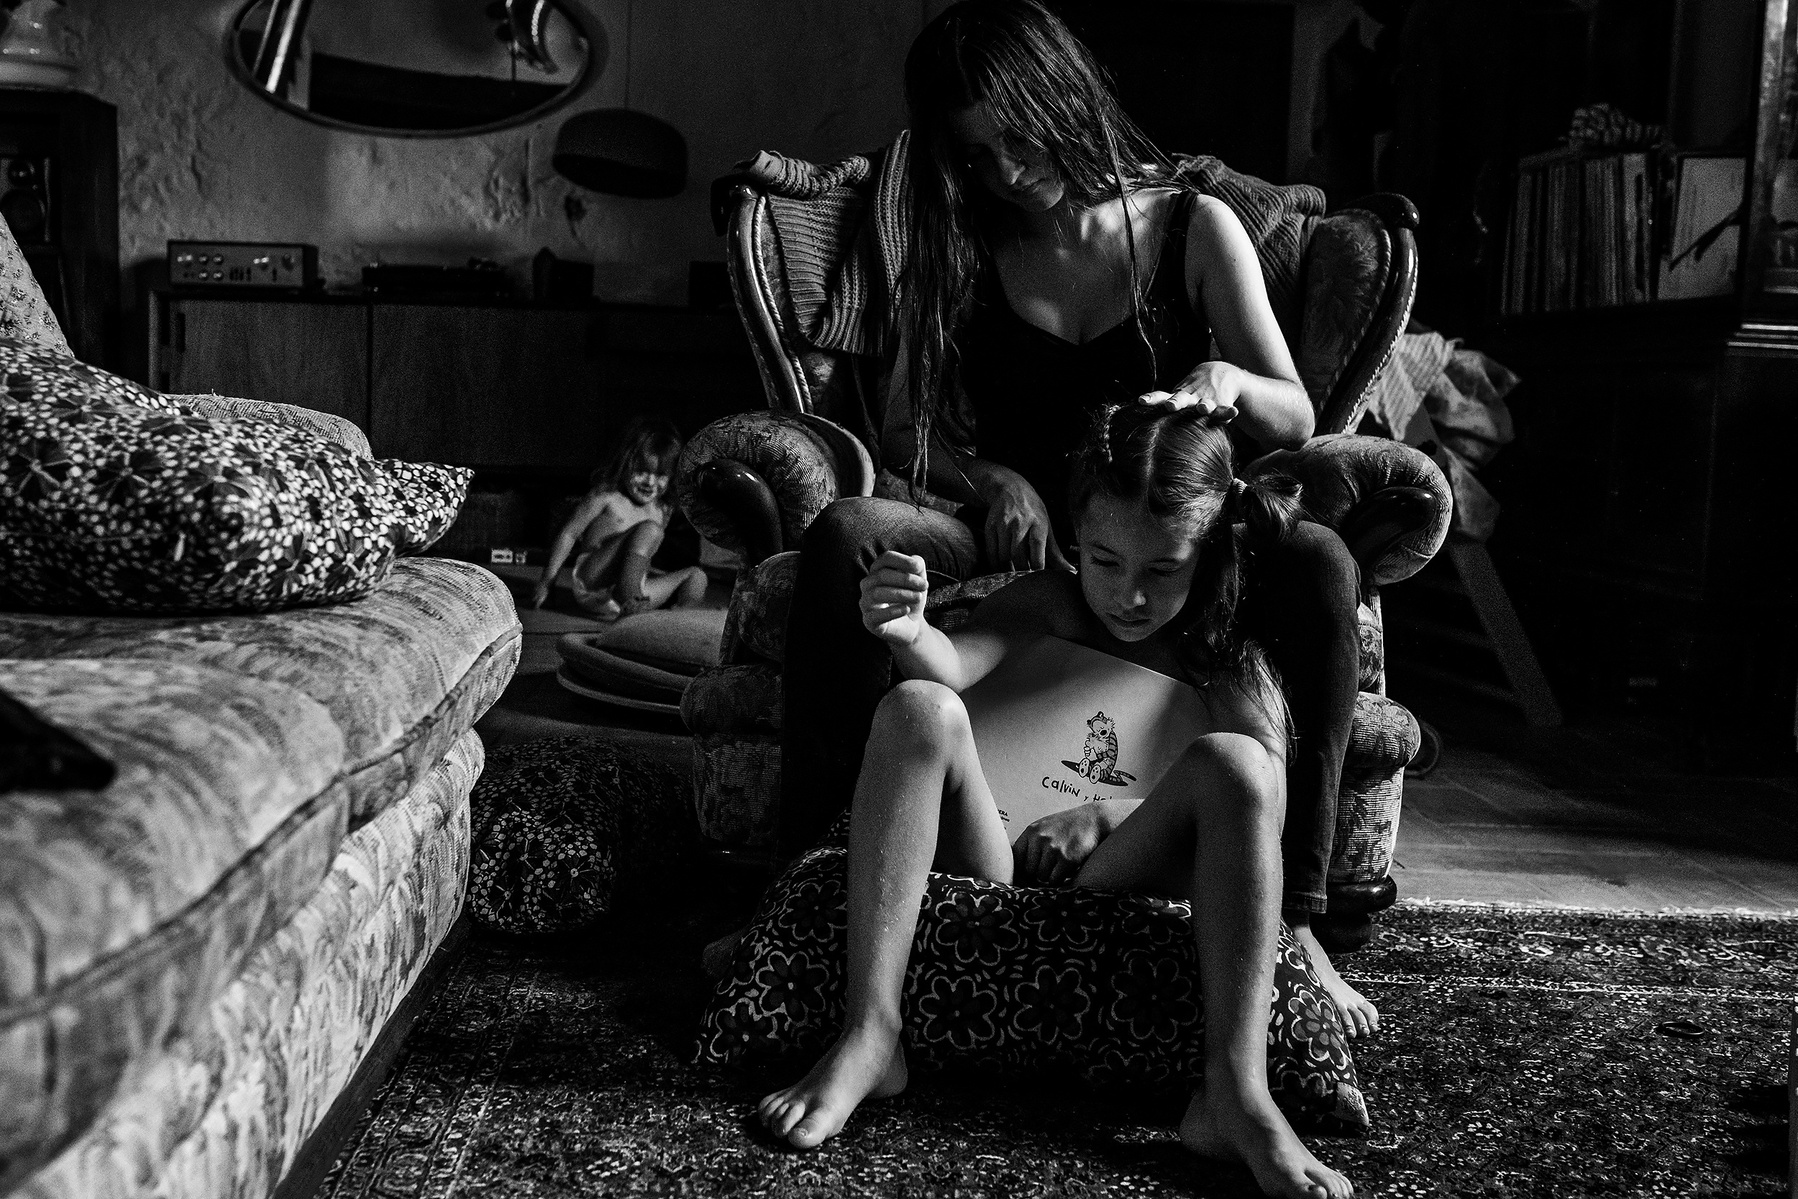 Making braids, siblings, Manuela franjou family photography